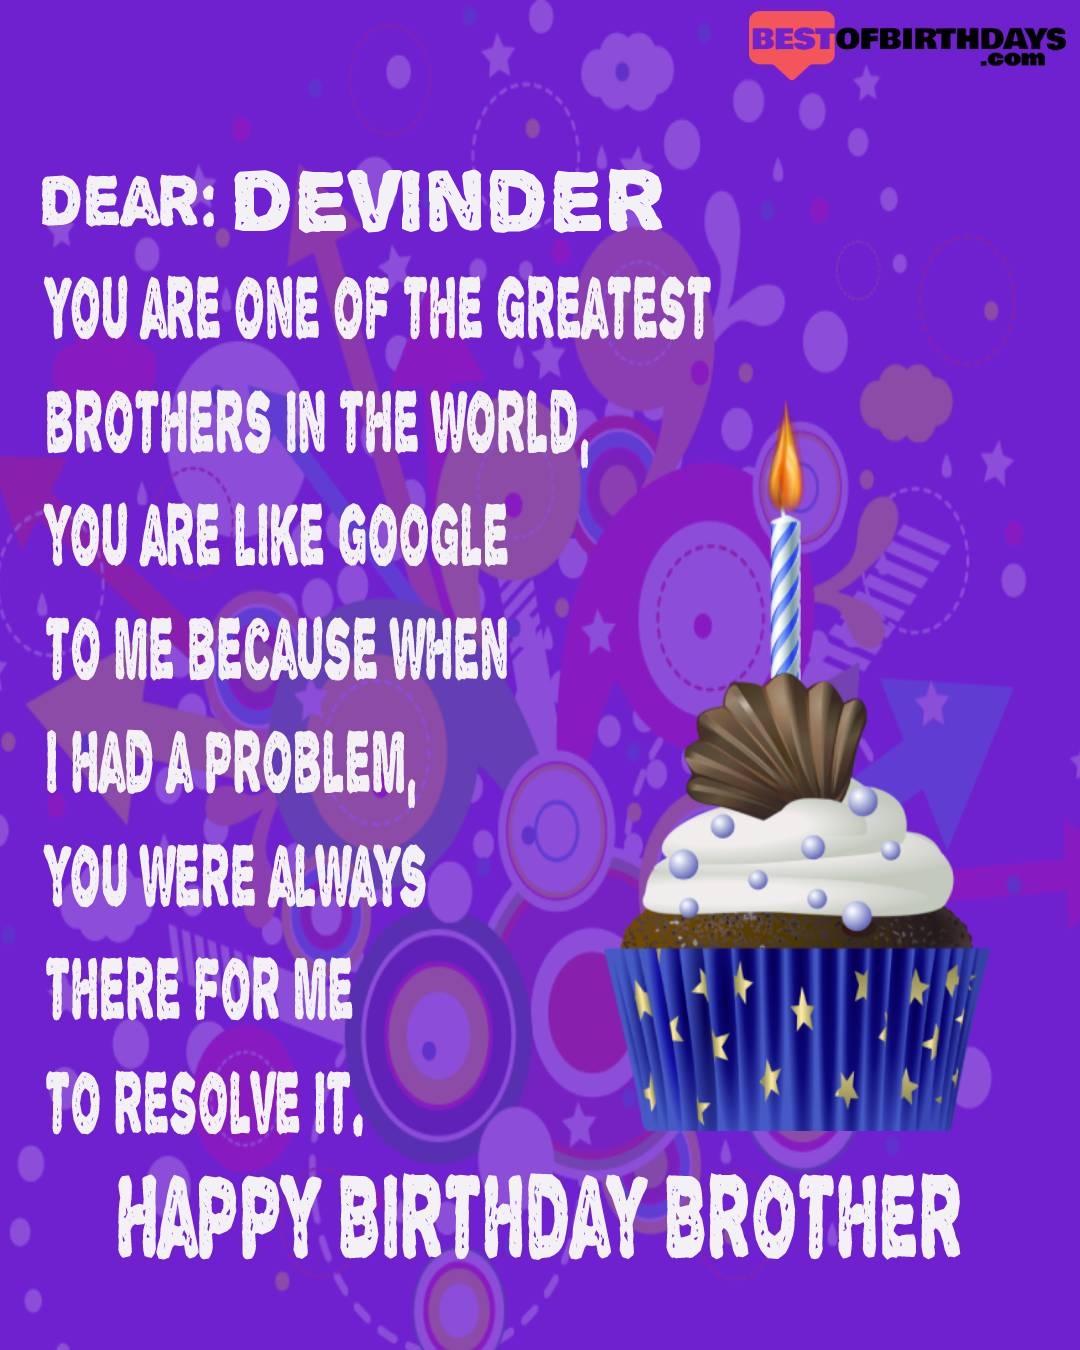 Happy birthday devinder bhai brother bro